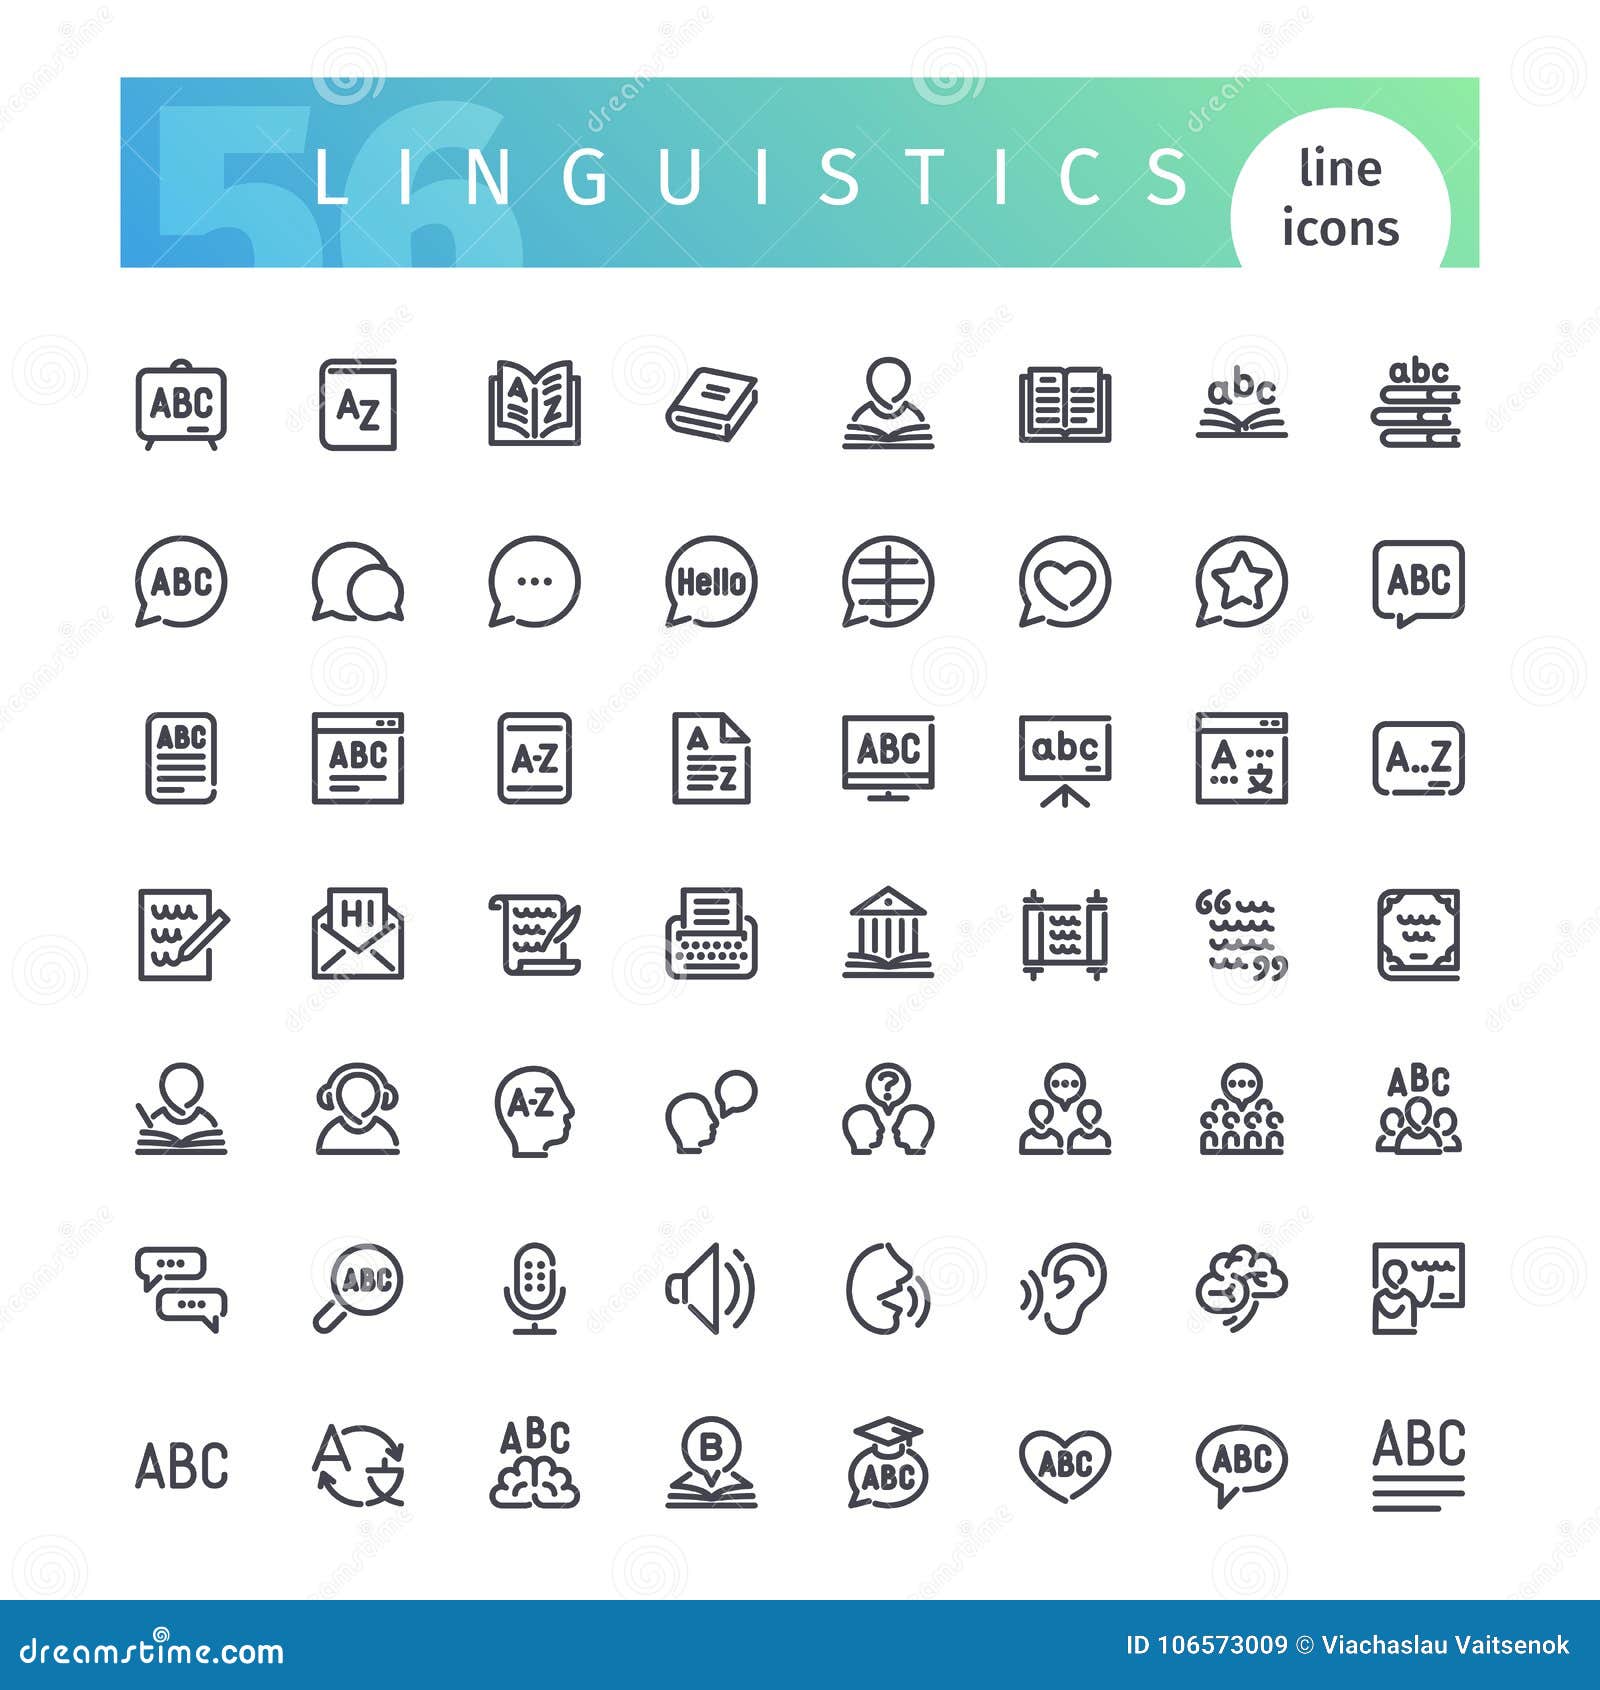 linguistics line icons set